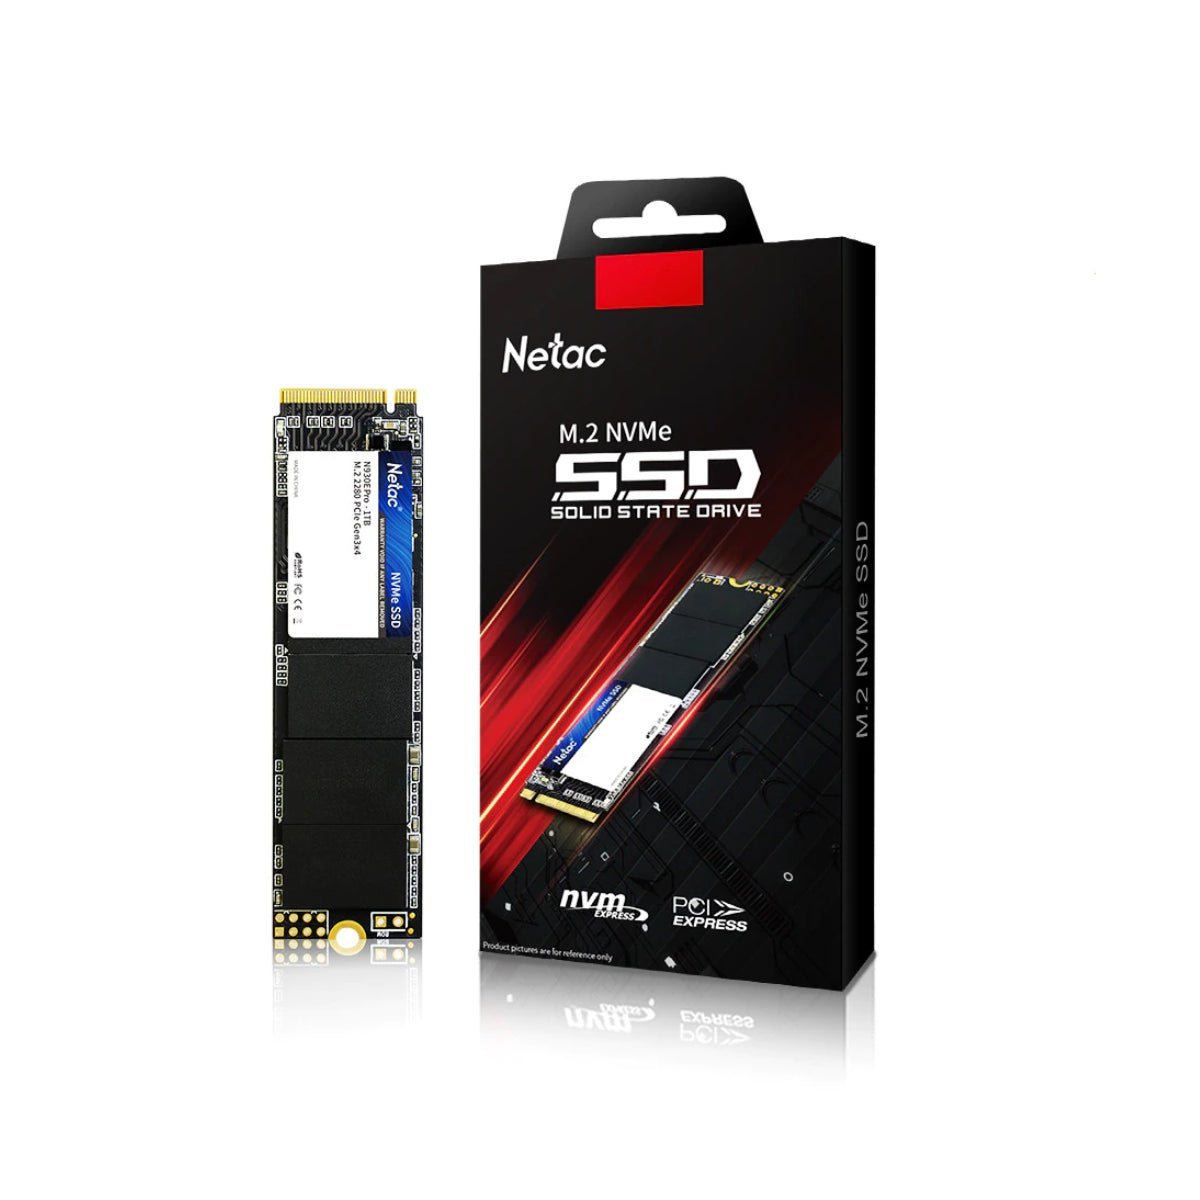 Netac N930E Pro 256GB NVMe M.2 Internal SSD - مساحة تخزين - Store 974 | ستور ٩٧٤